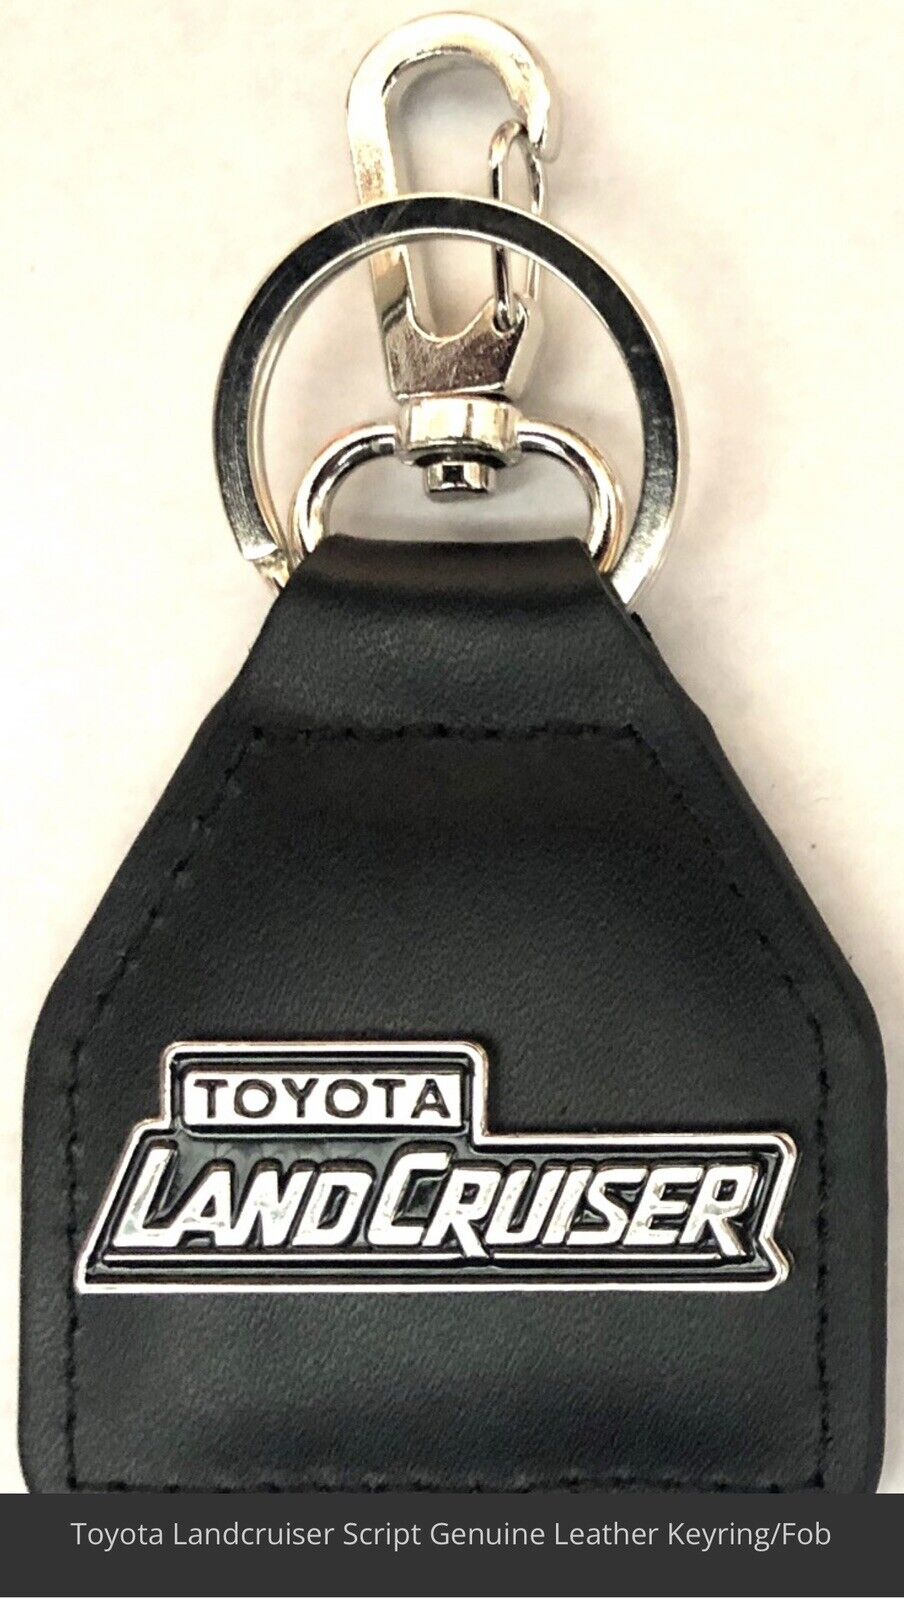 Australian Made Leather Keyring/Fob - Toyota Landcruiser Script 2